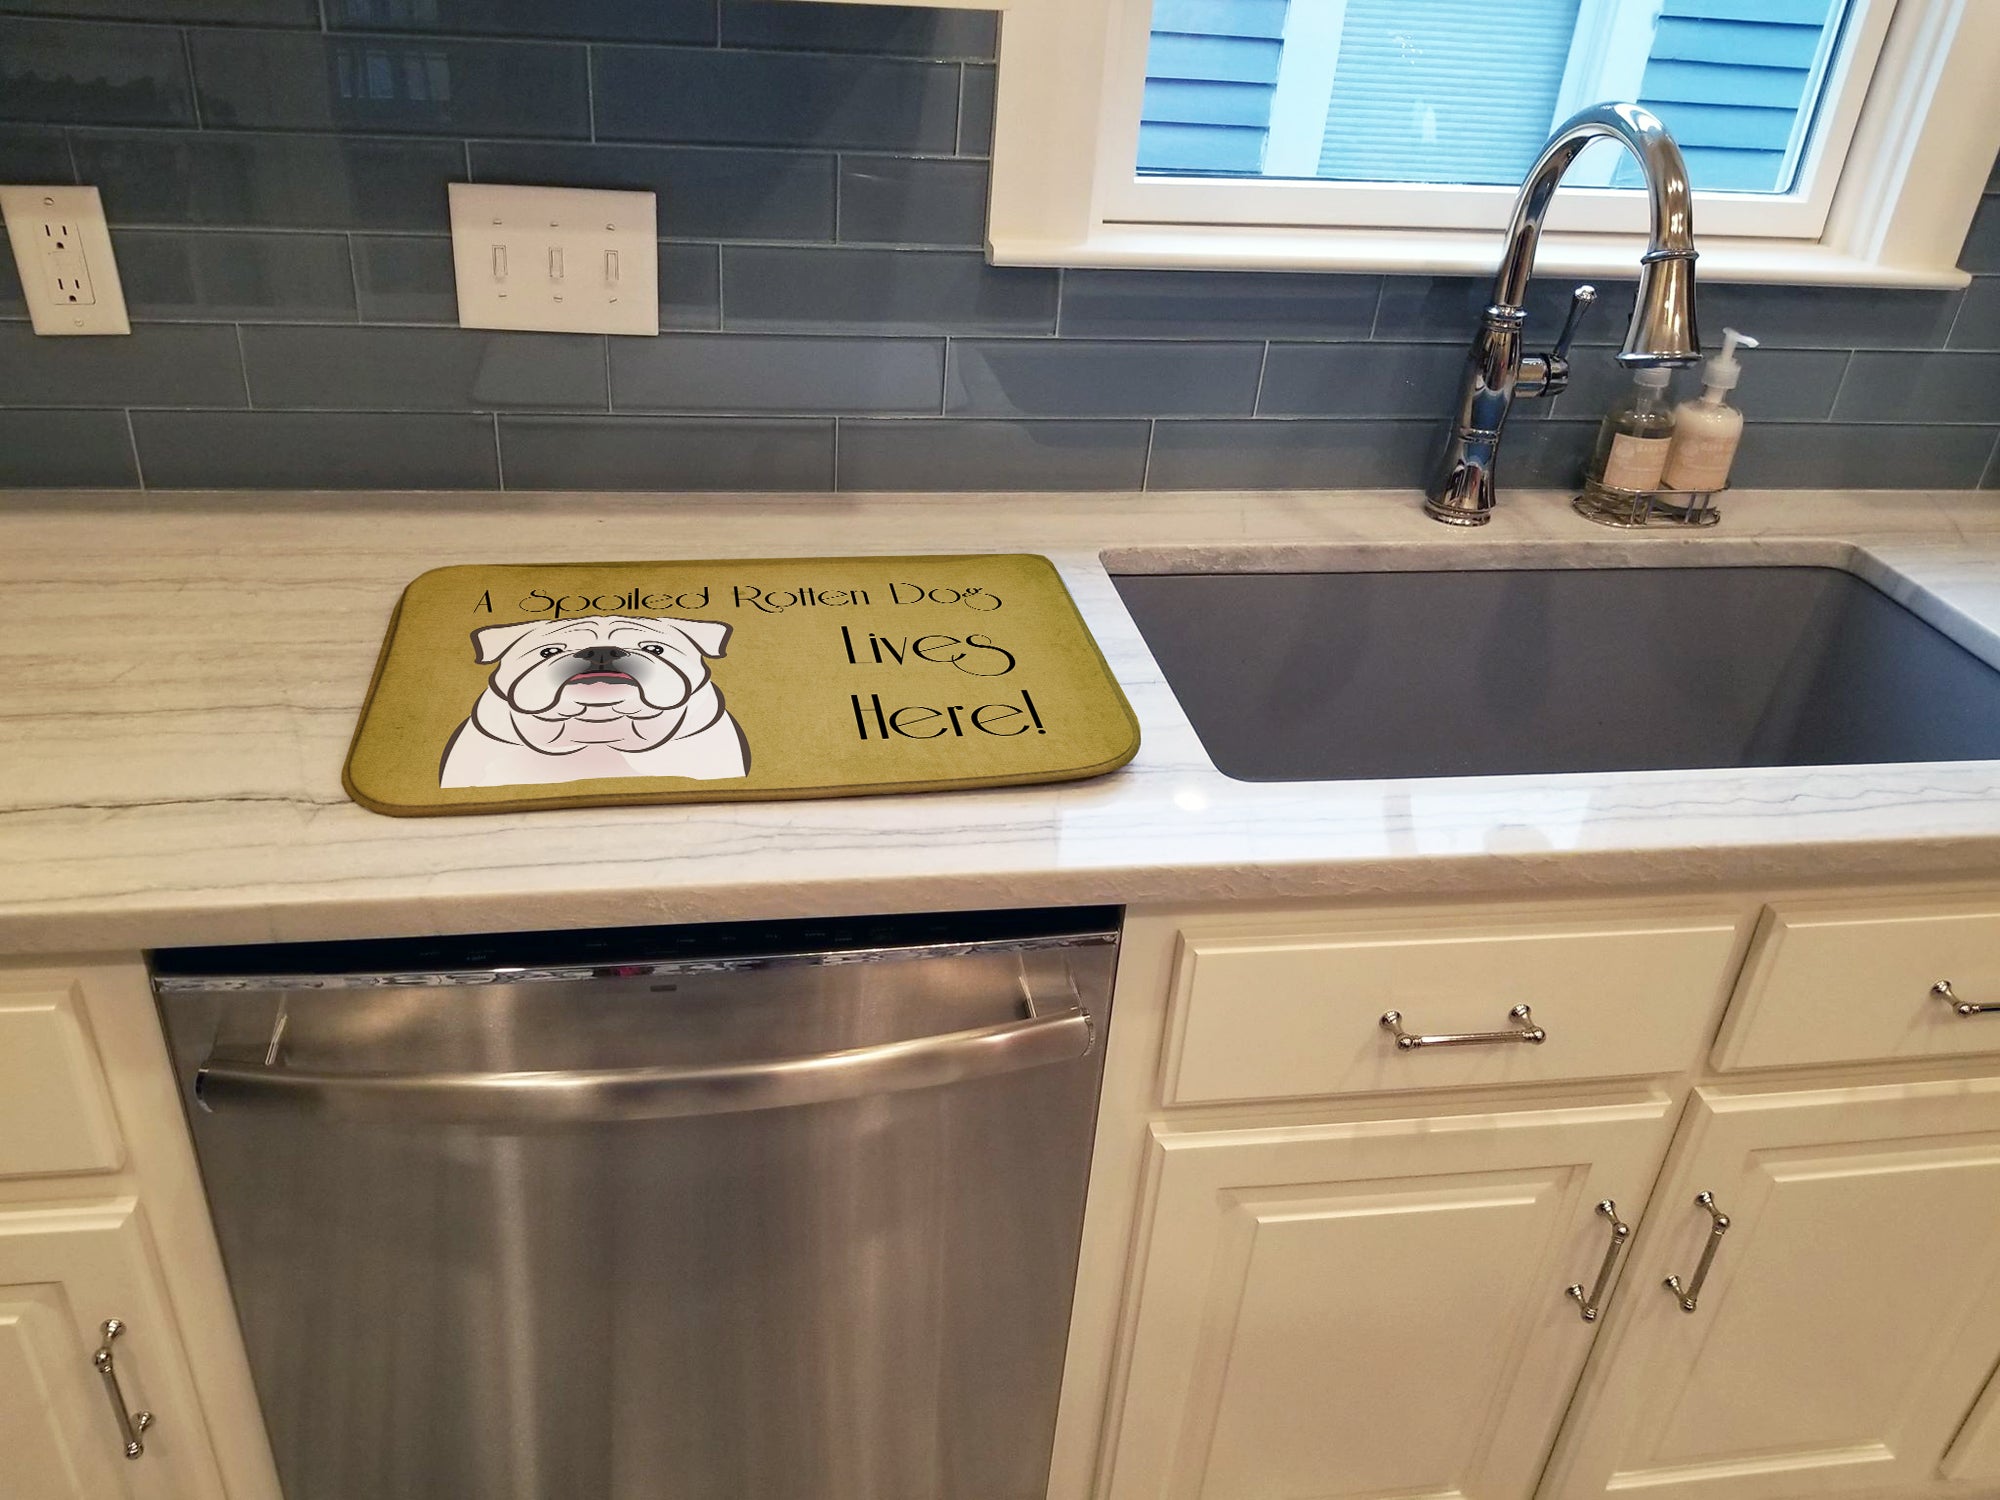 White English Bulldog  Spoiled Dog Lives Here Dish Drying Mat BB1468DDM